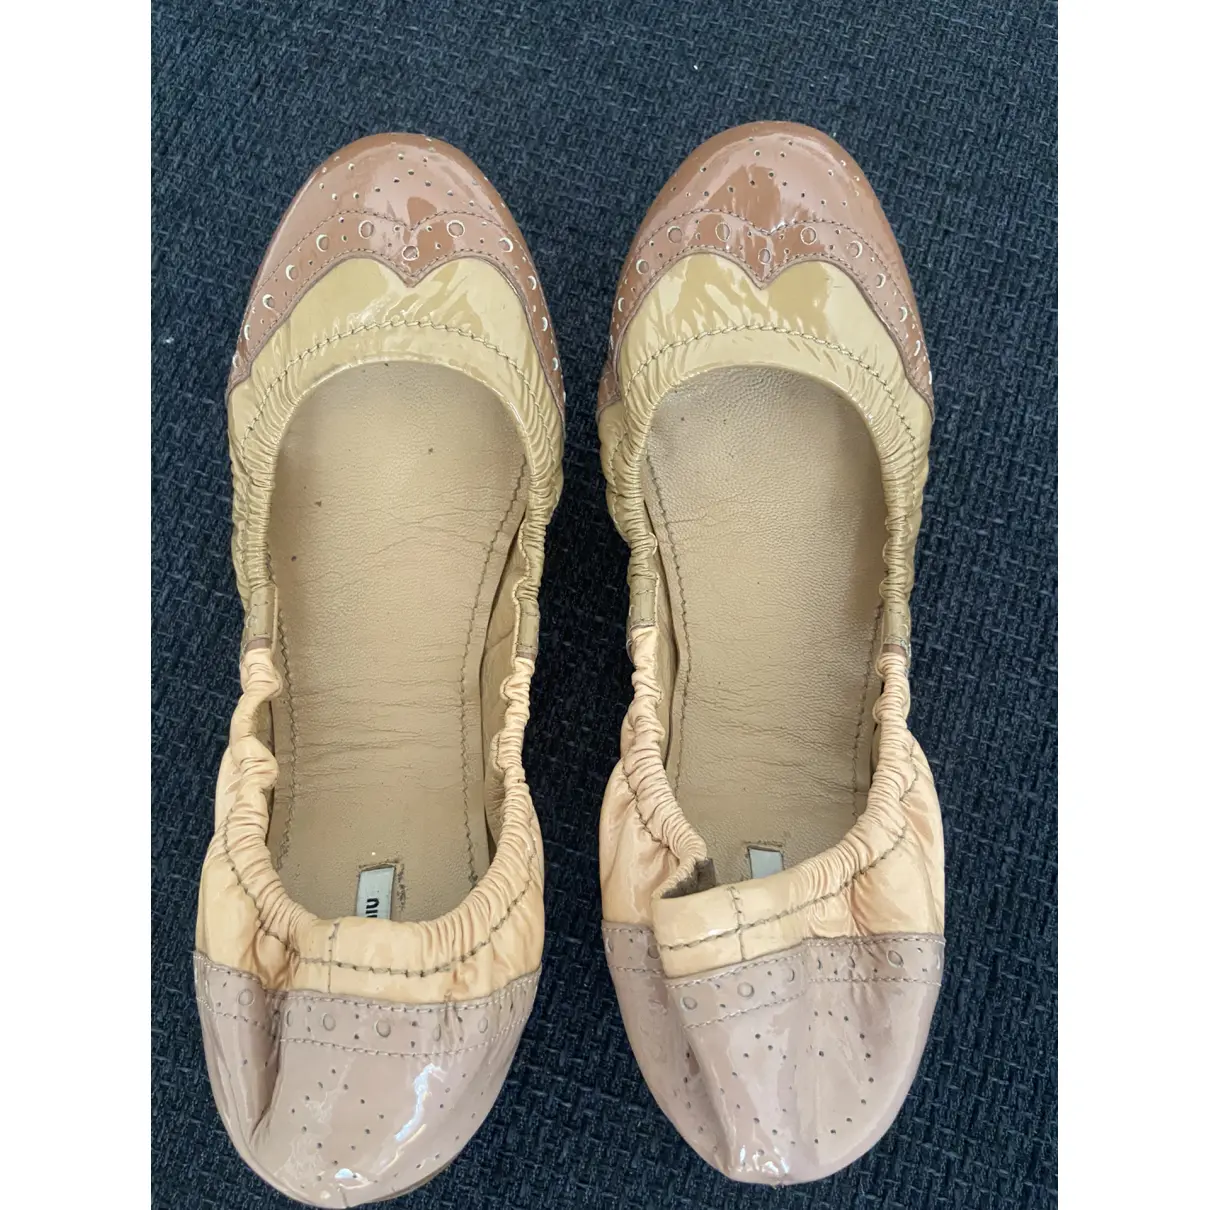 Buy Miu Miu Patent leather ballet flats online